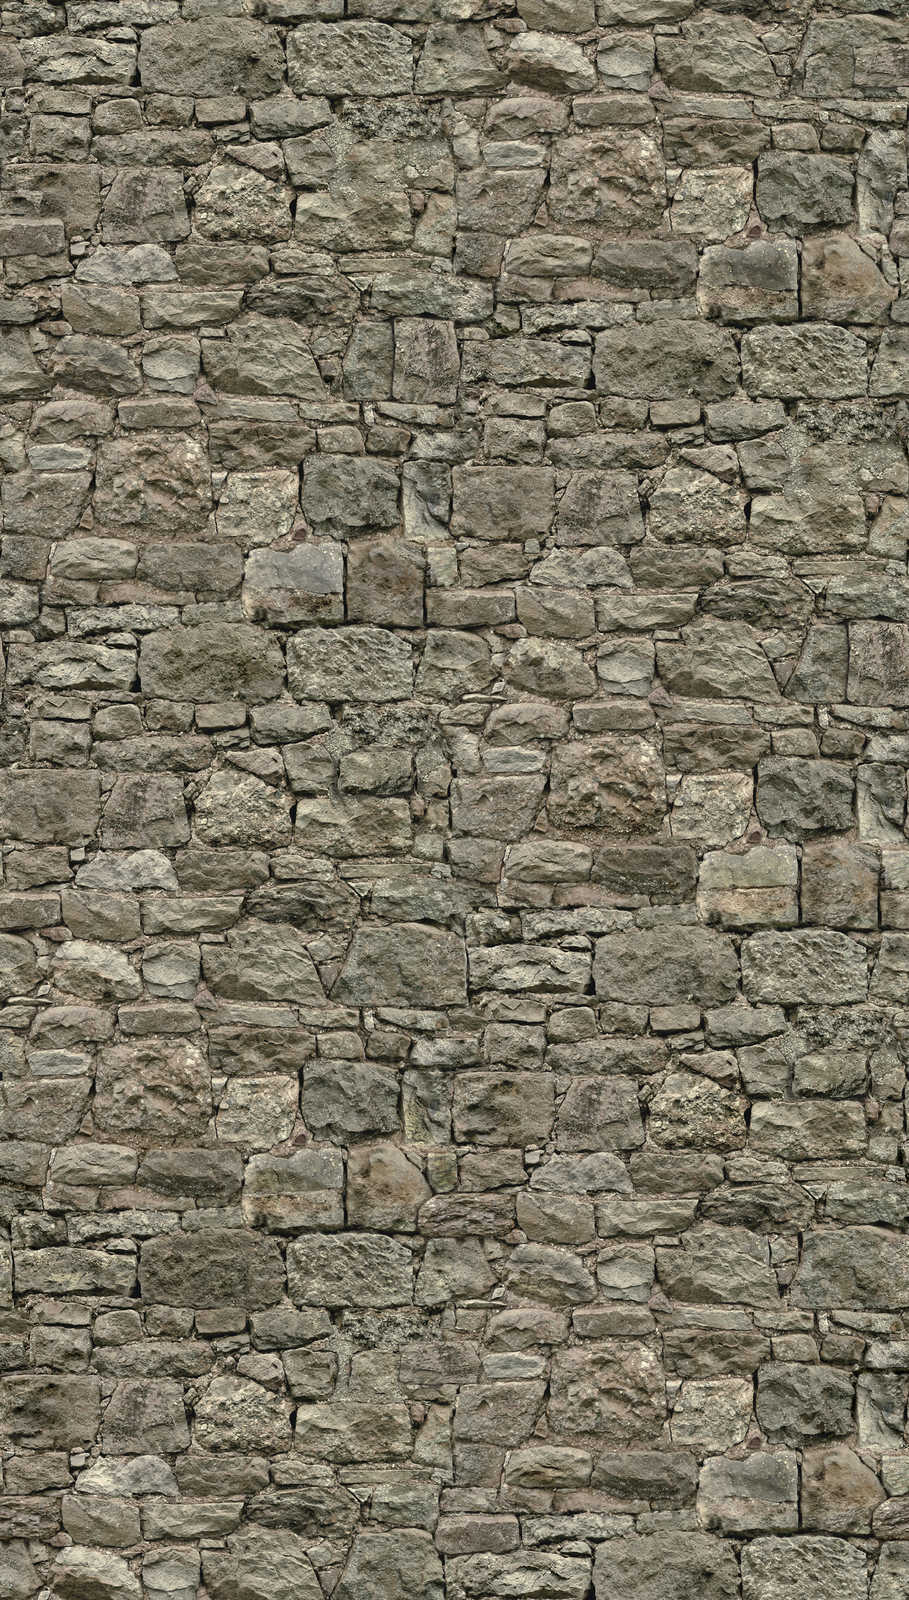             Vliestapete Steinoptik Wand in dunklen Farben – Grau, Beige
        